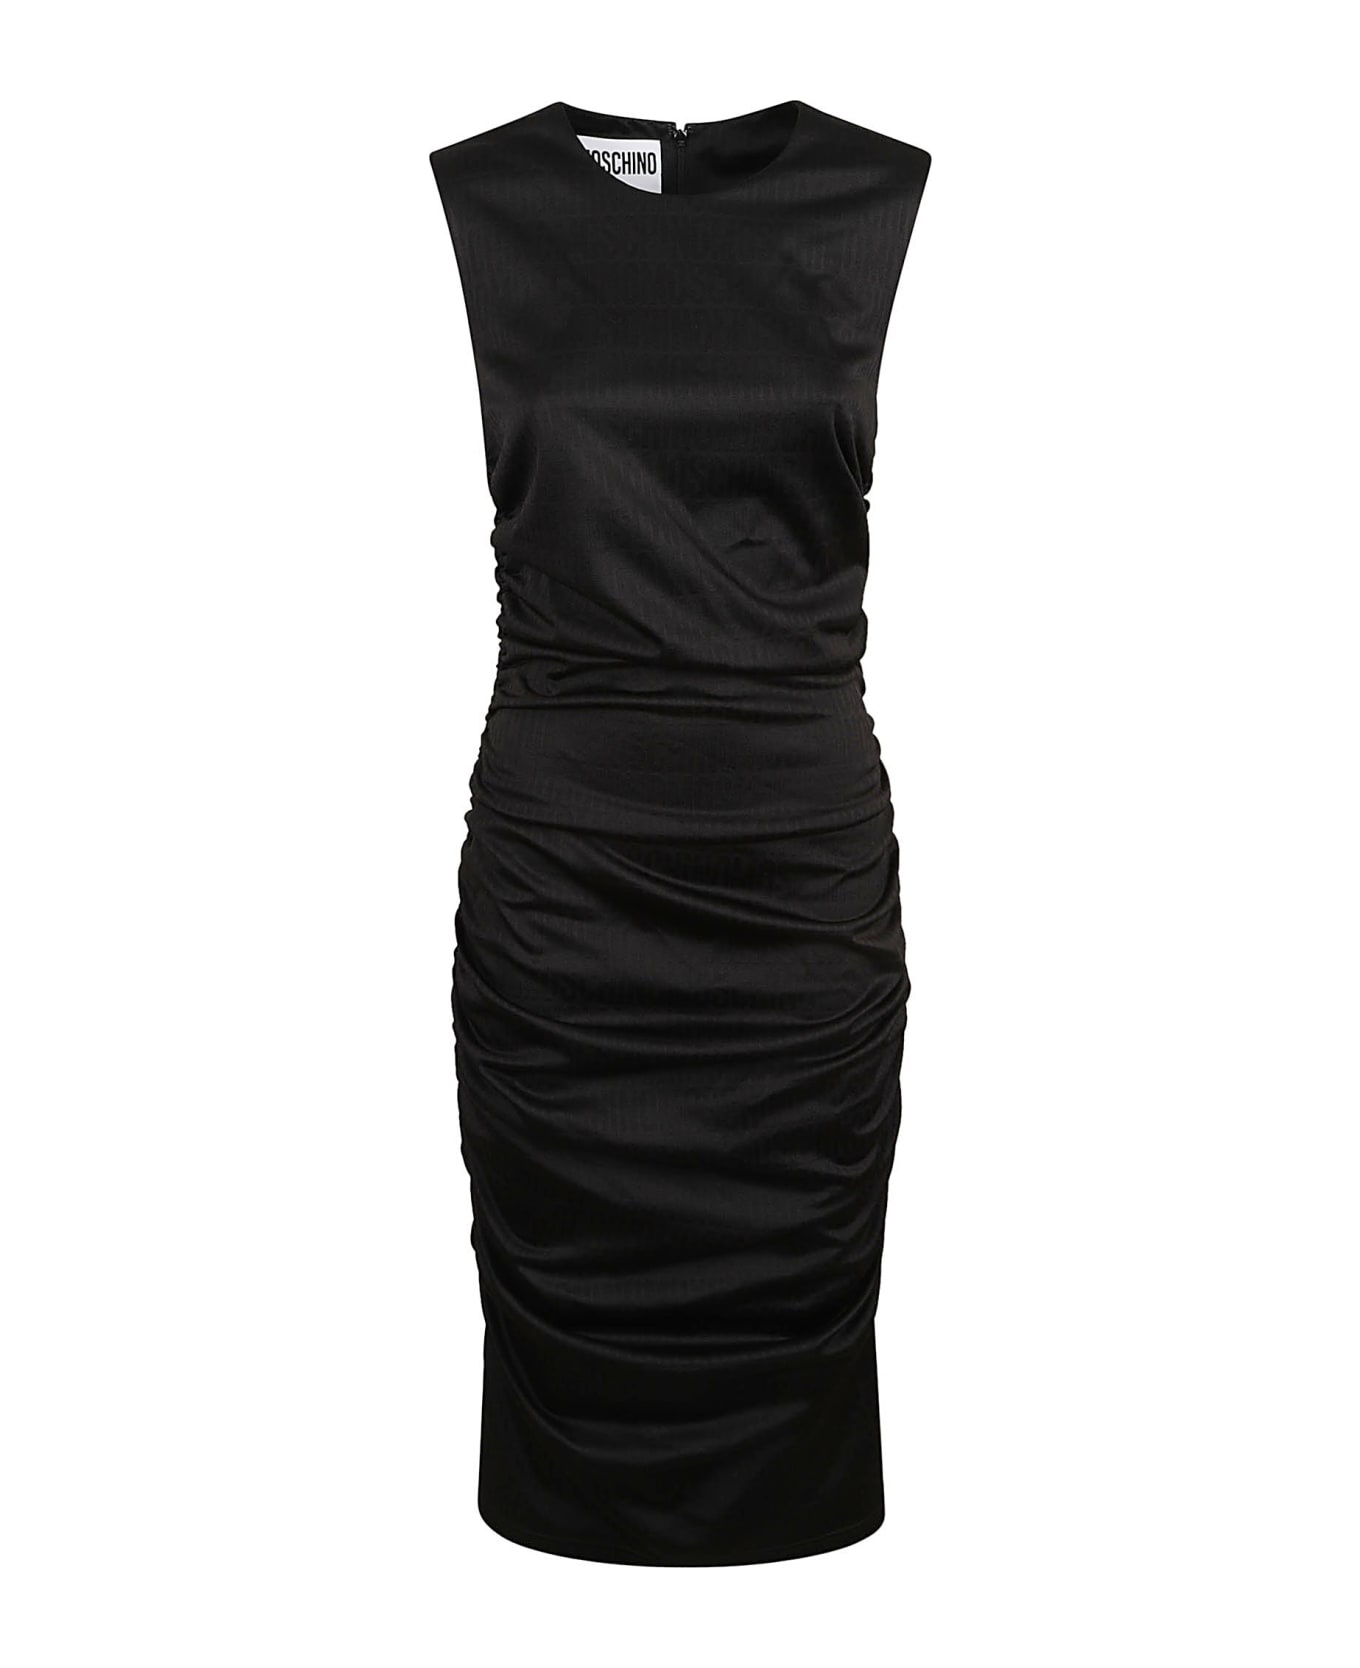 Moschino Sleeveless Fitted Dress - Black